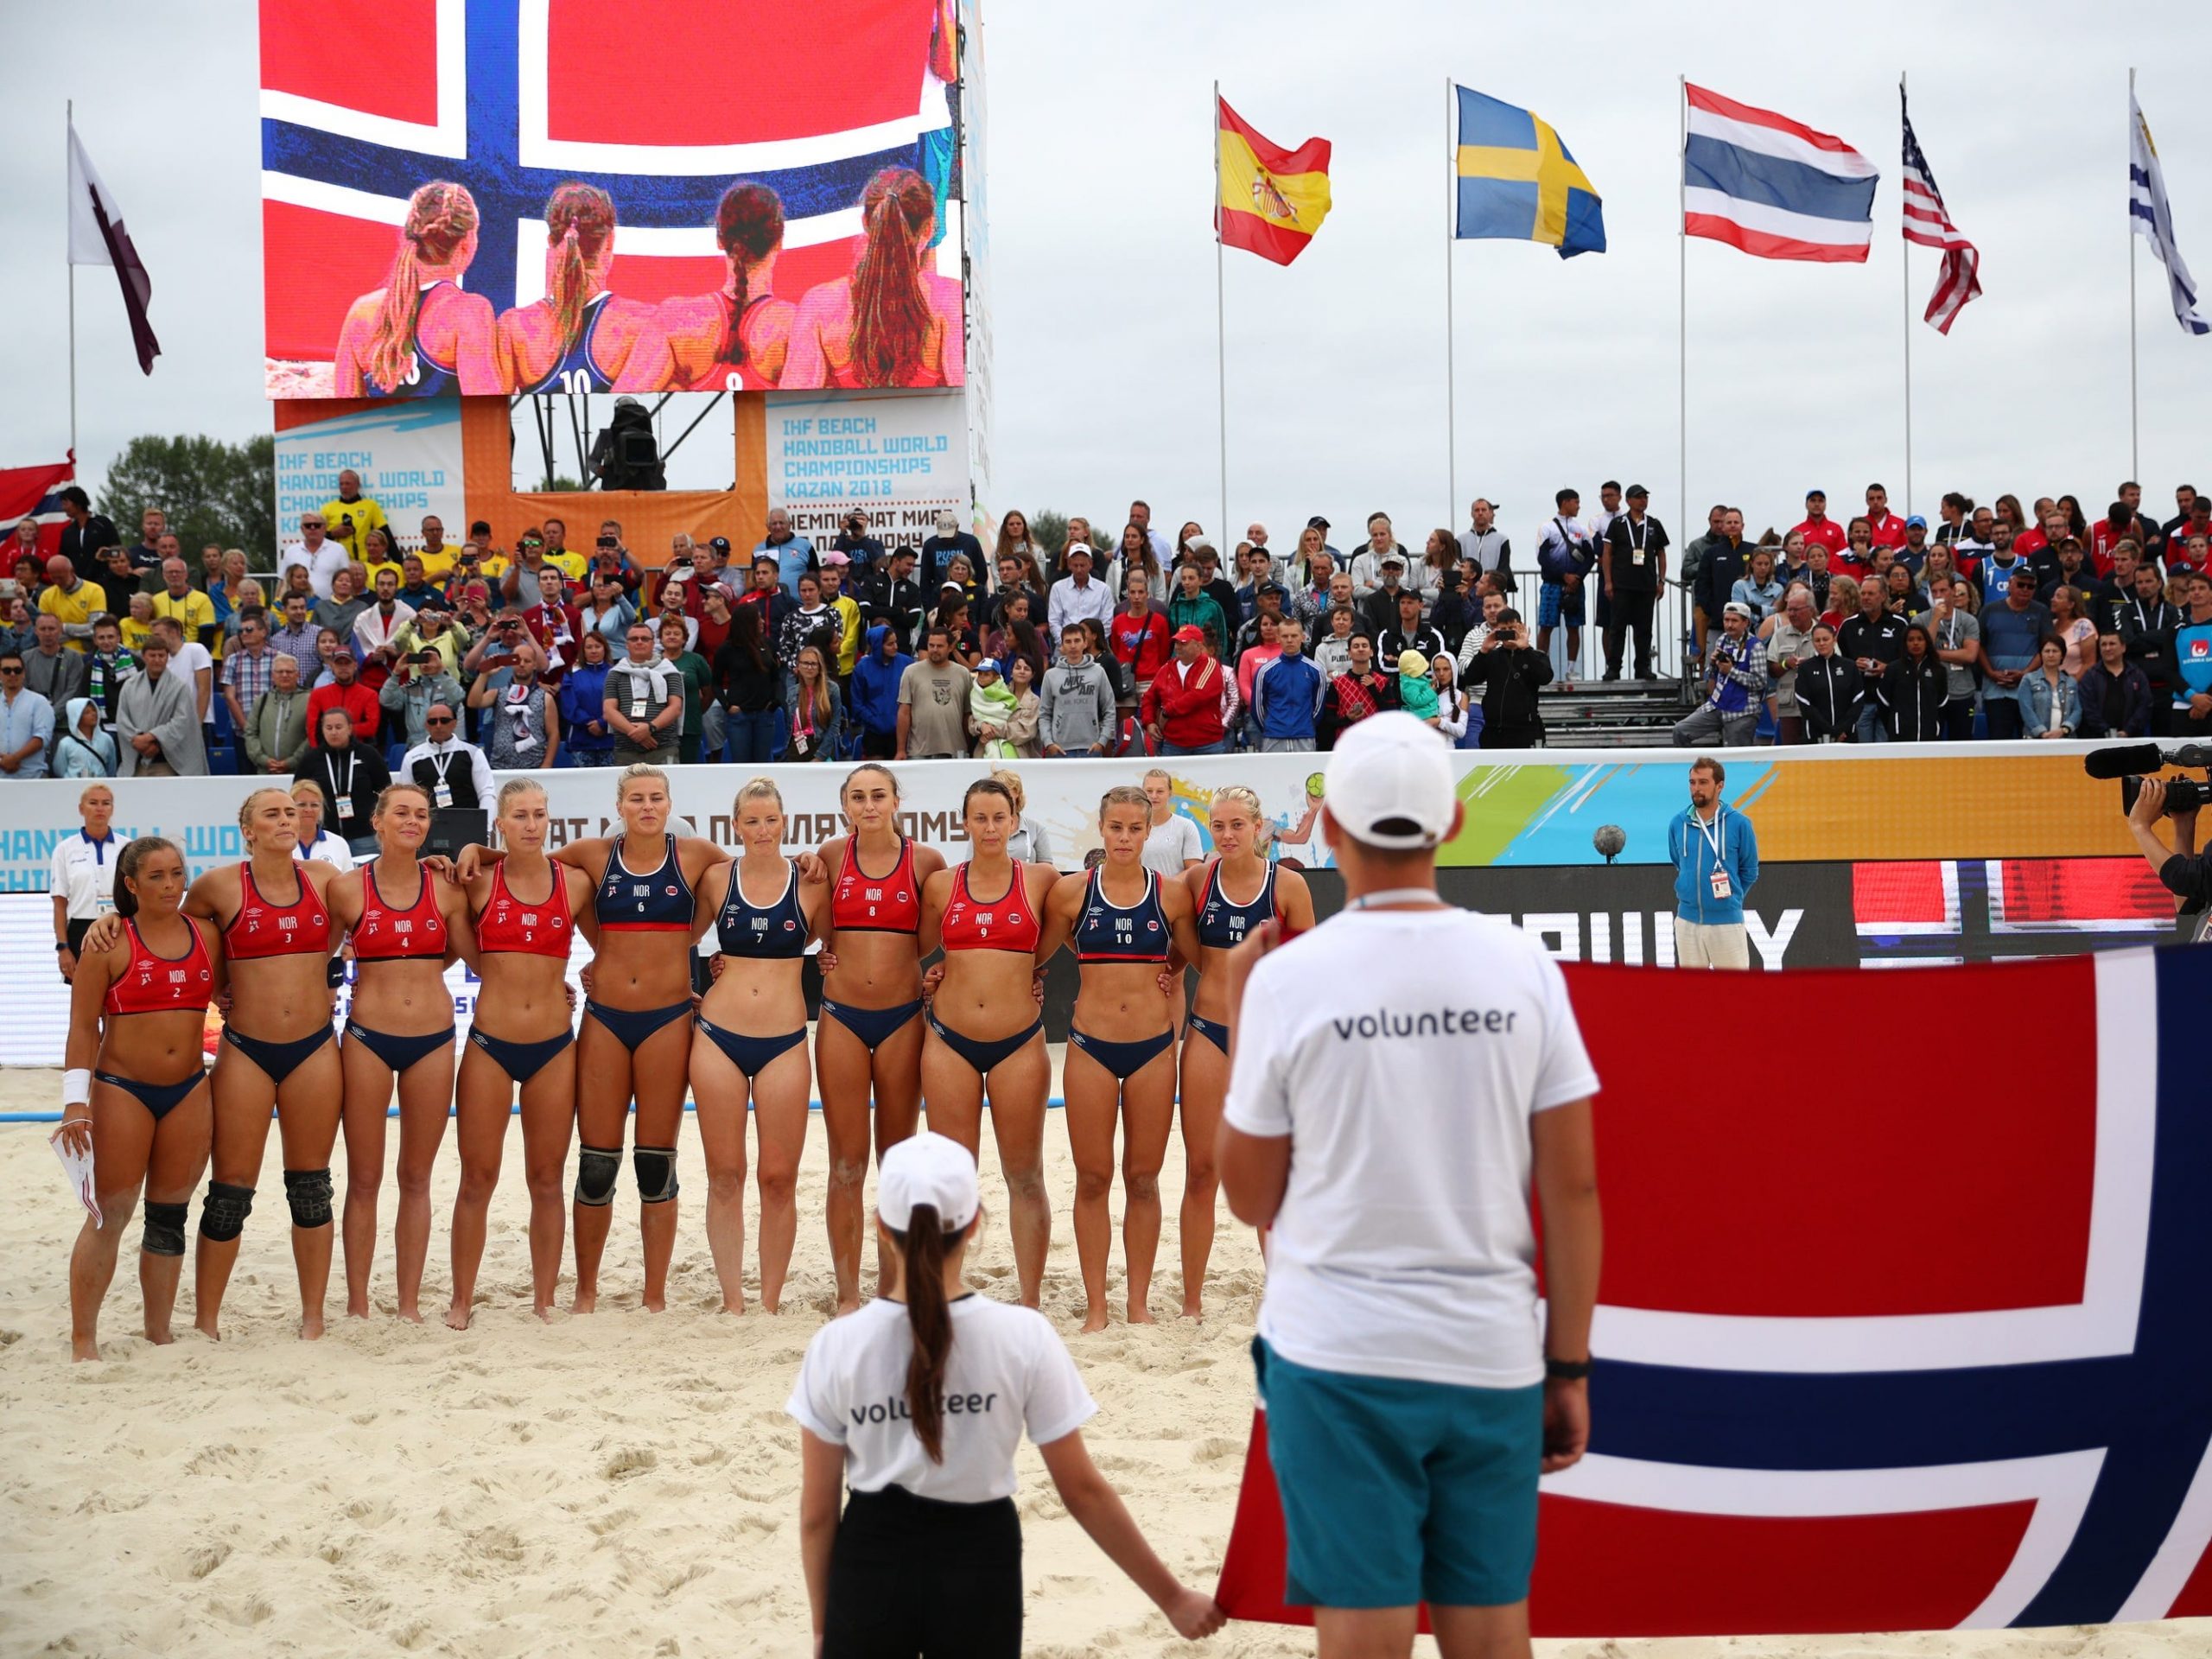 Norway team line up during 2018 Women's Beach Handball World Cup final against Greece.